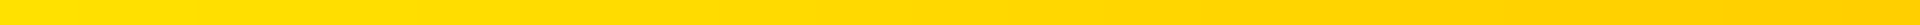 Yellow-Band